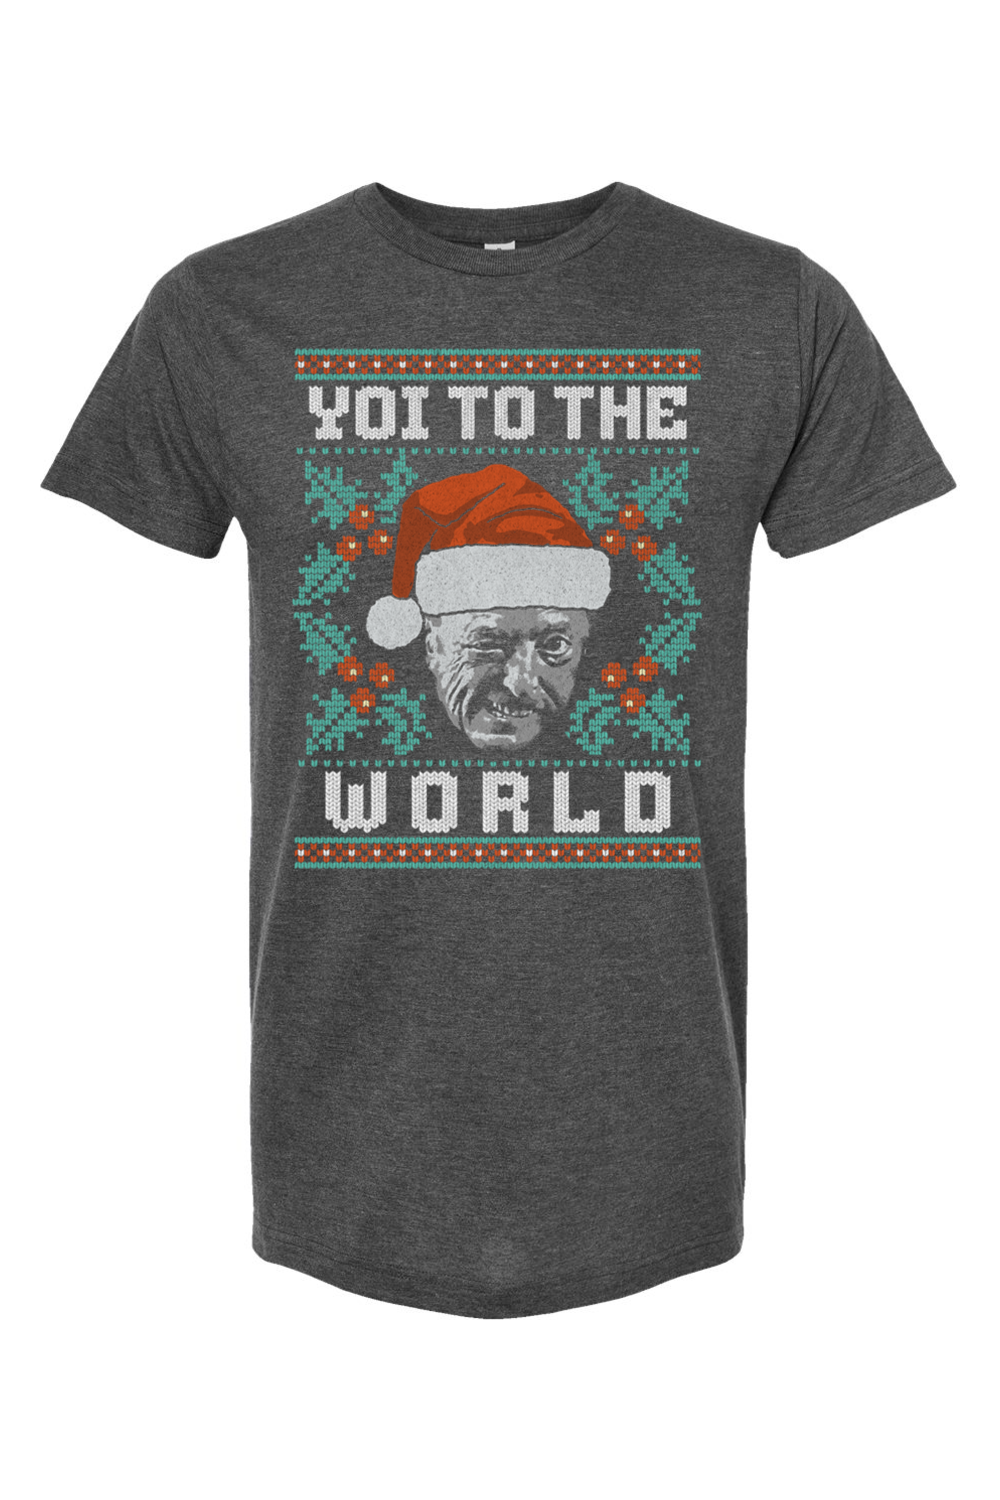 Yoi to the World - Ugly Christmas Sweater Tee - Yinzylvania